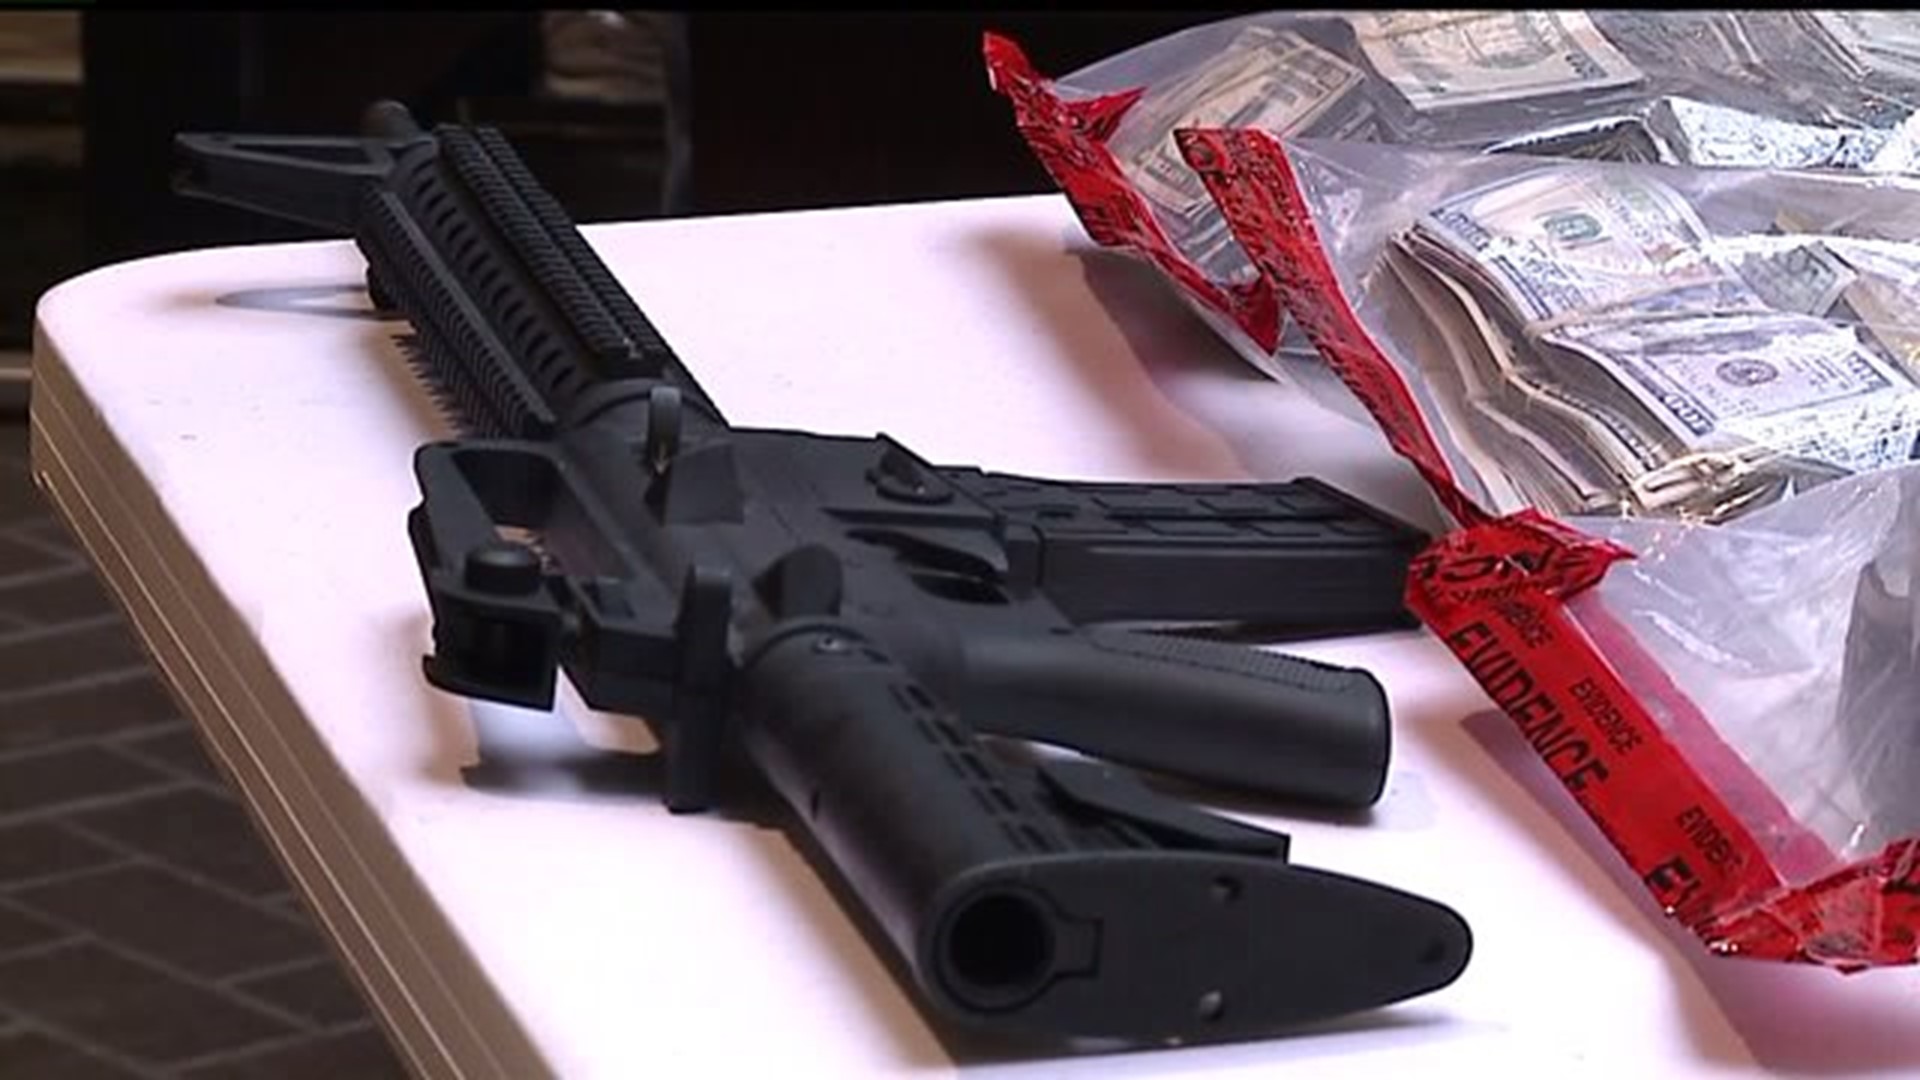 Lancaster County officials announce tougher response for illegal guns